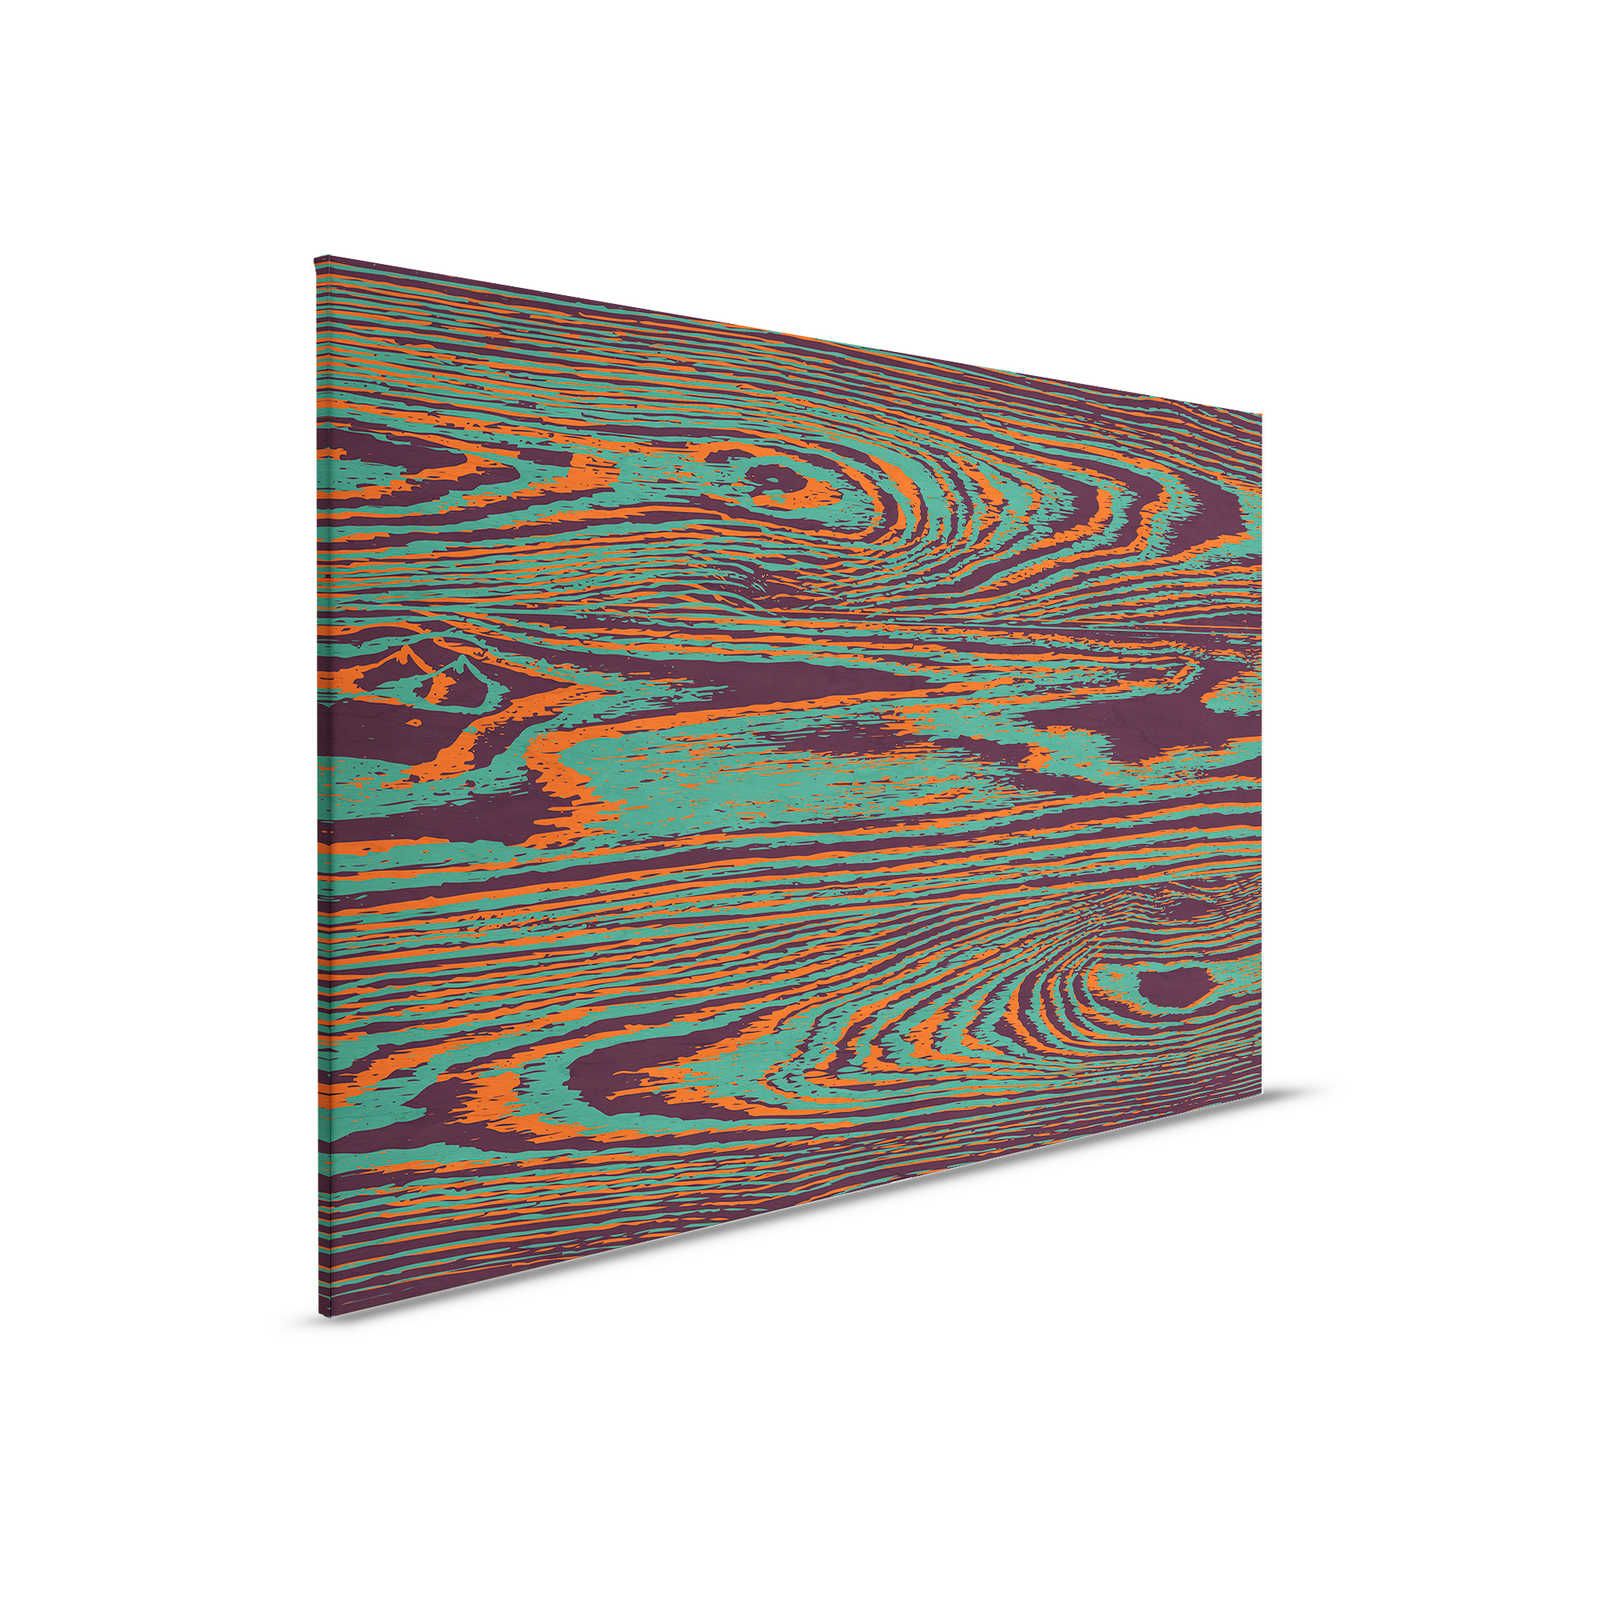         Kontiki 1 - Leinwandbild Holzmaserung Neon-Farben, Grün & Schwarz – 0,90 m x 0,60 m
    